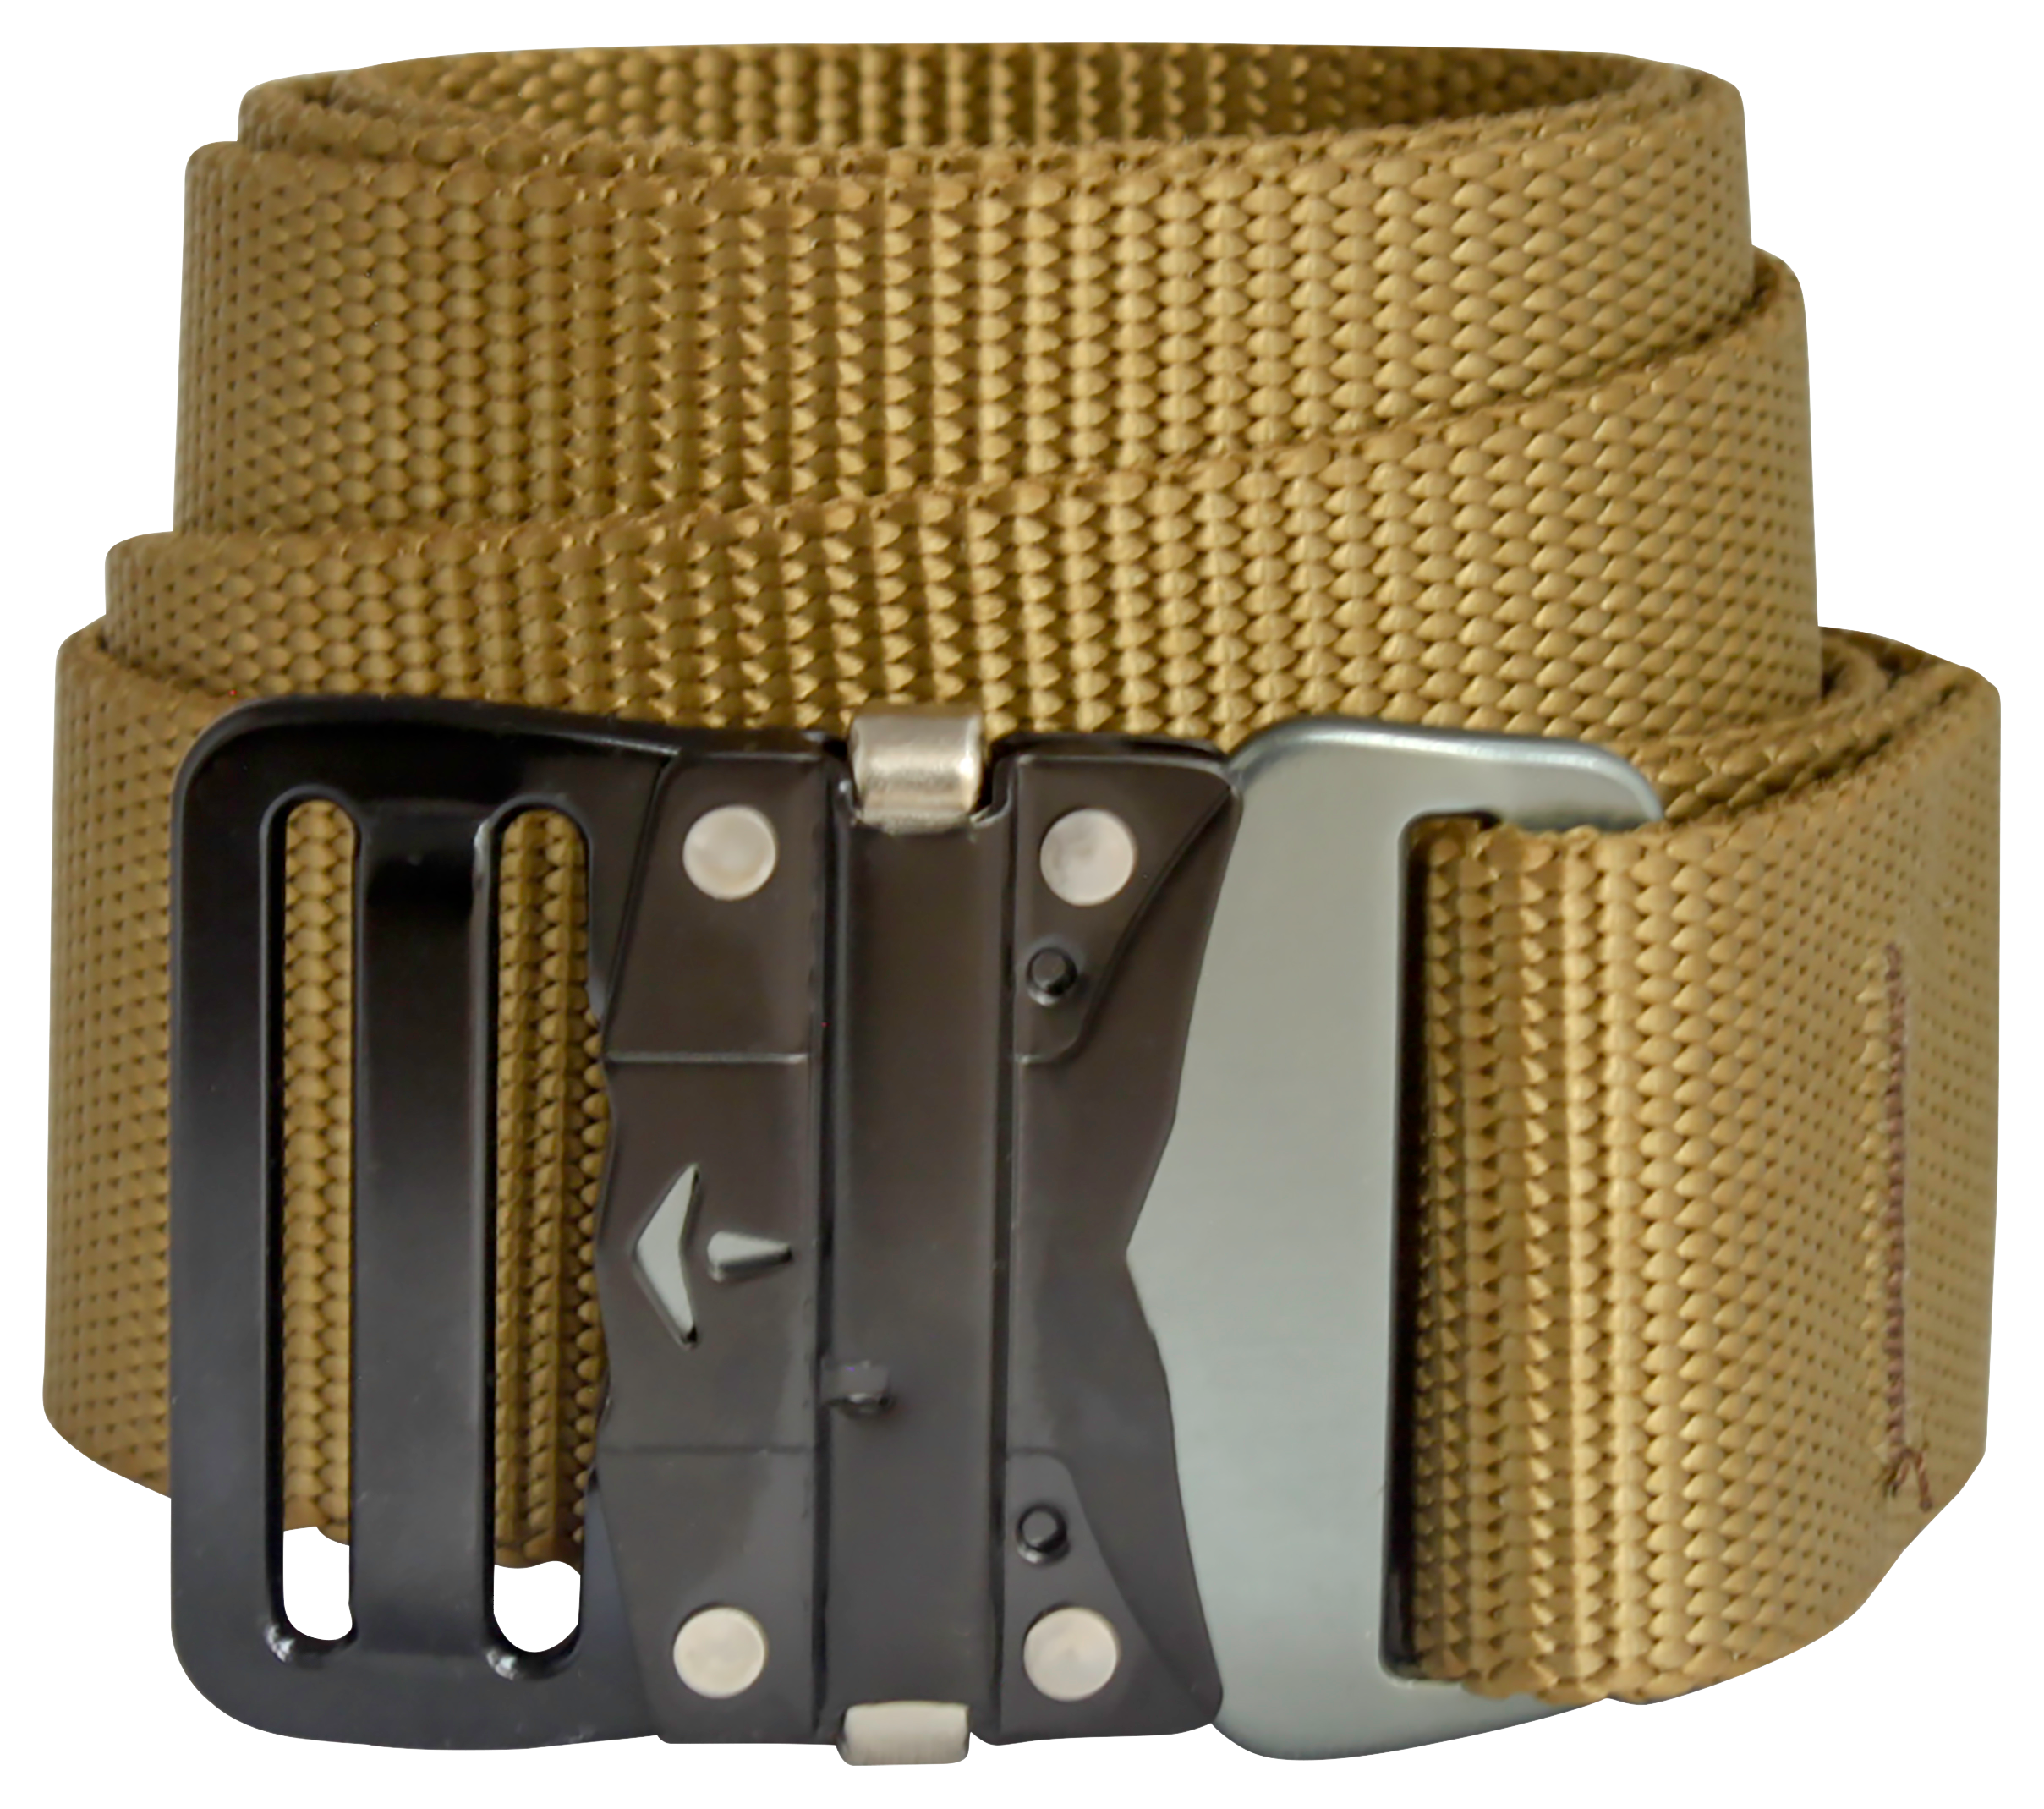 Bison Designs 38mm LoPro Buckle Belt for Men - Coyote Brown - M